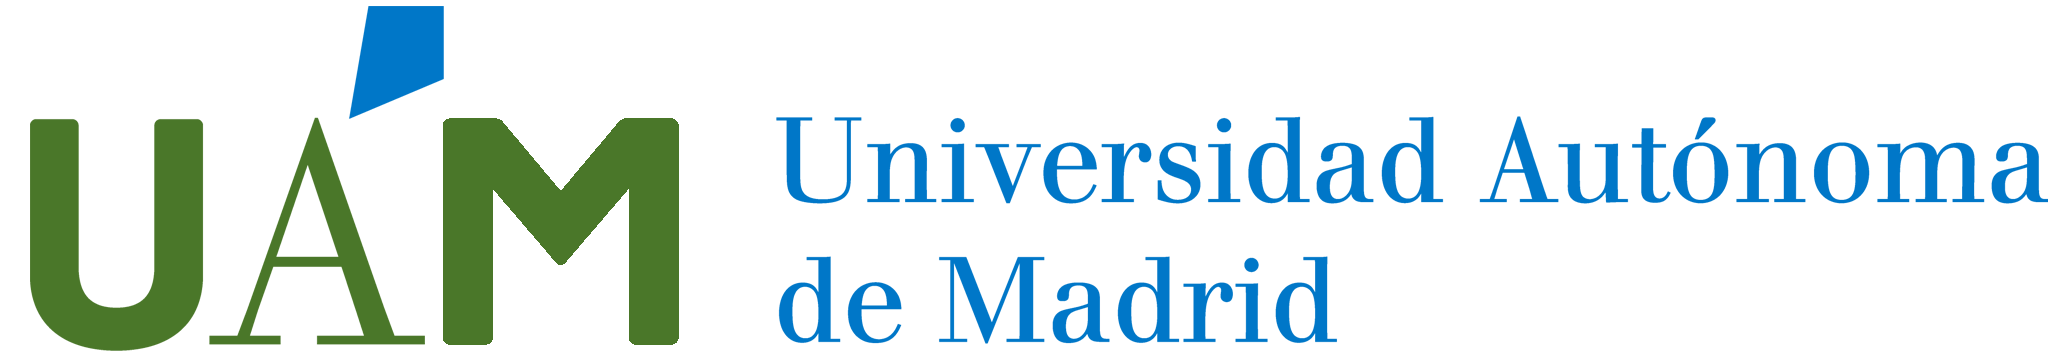 Universidad Autónoma de Madrid Home Page